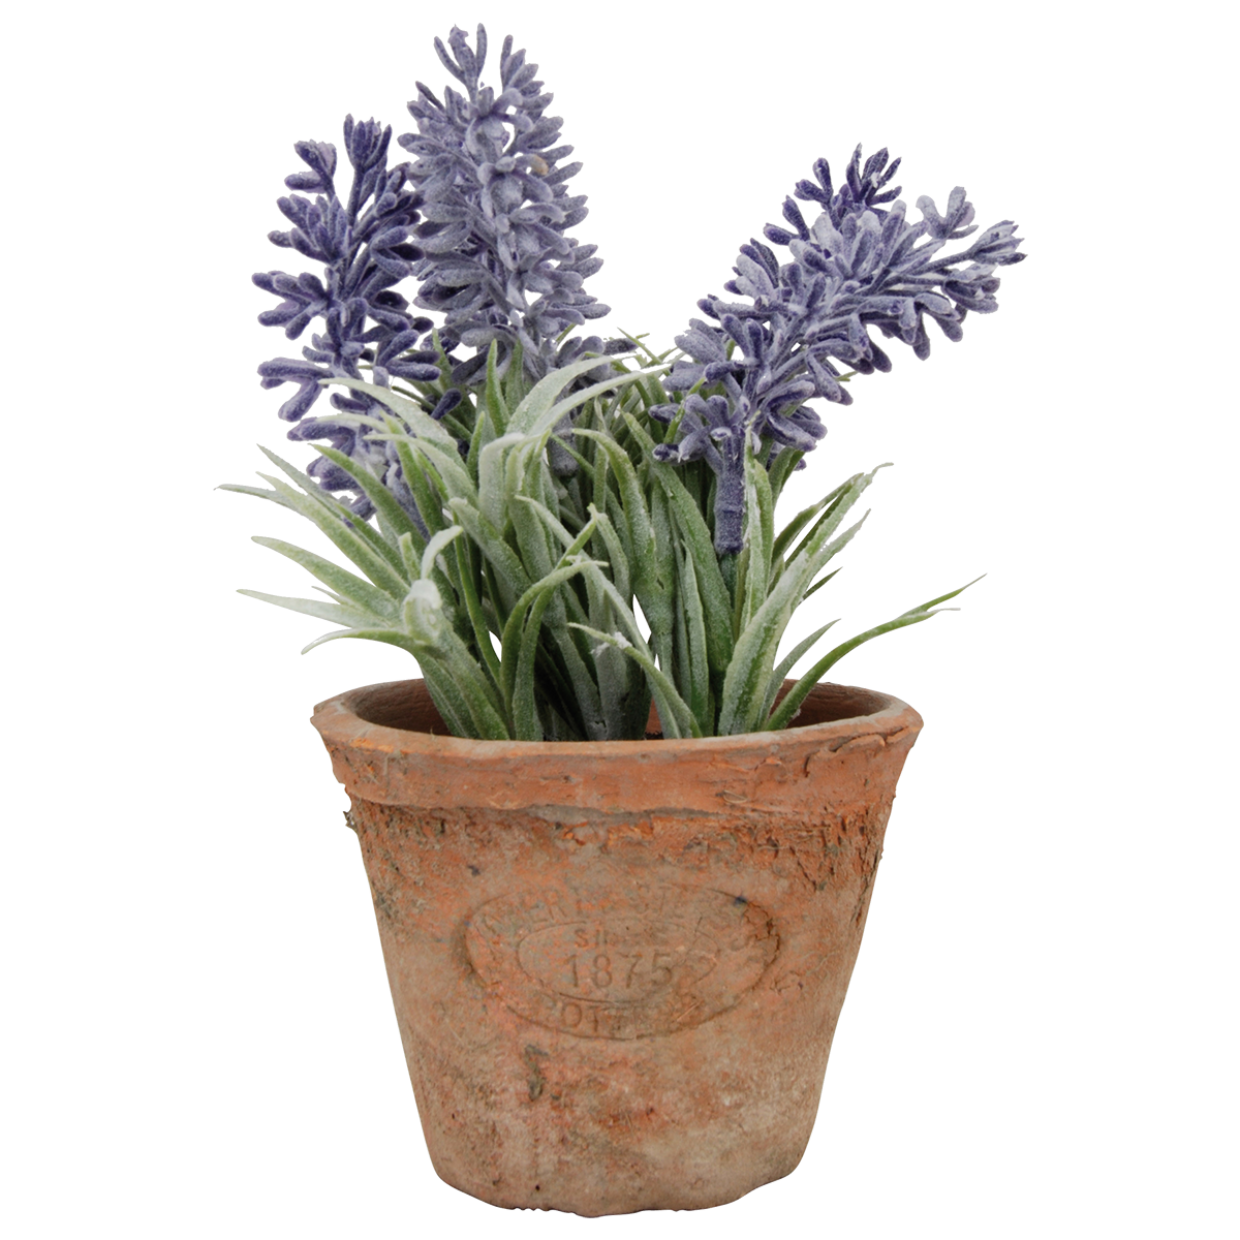 Artificial Lavender In Terracotta Pot